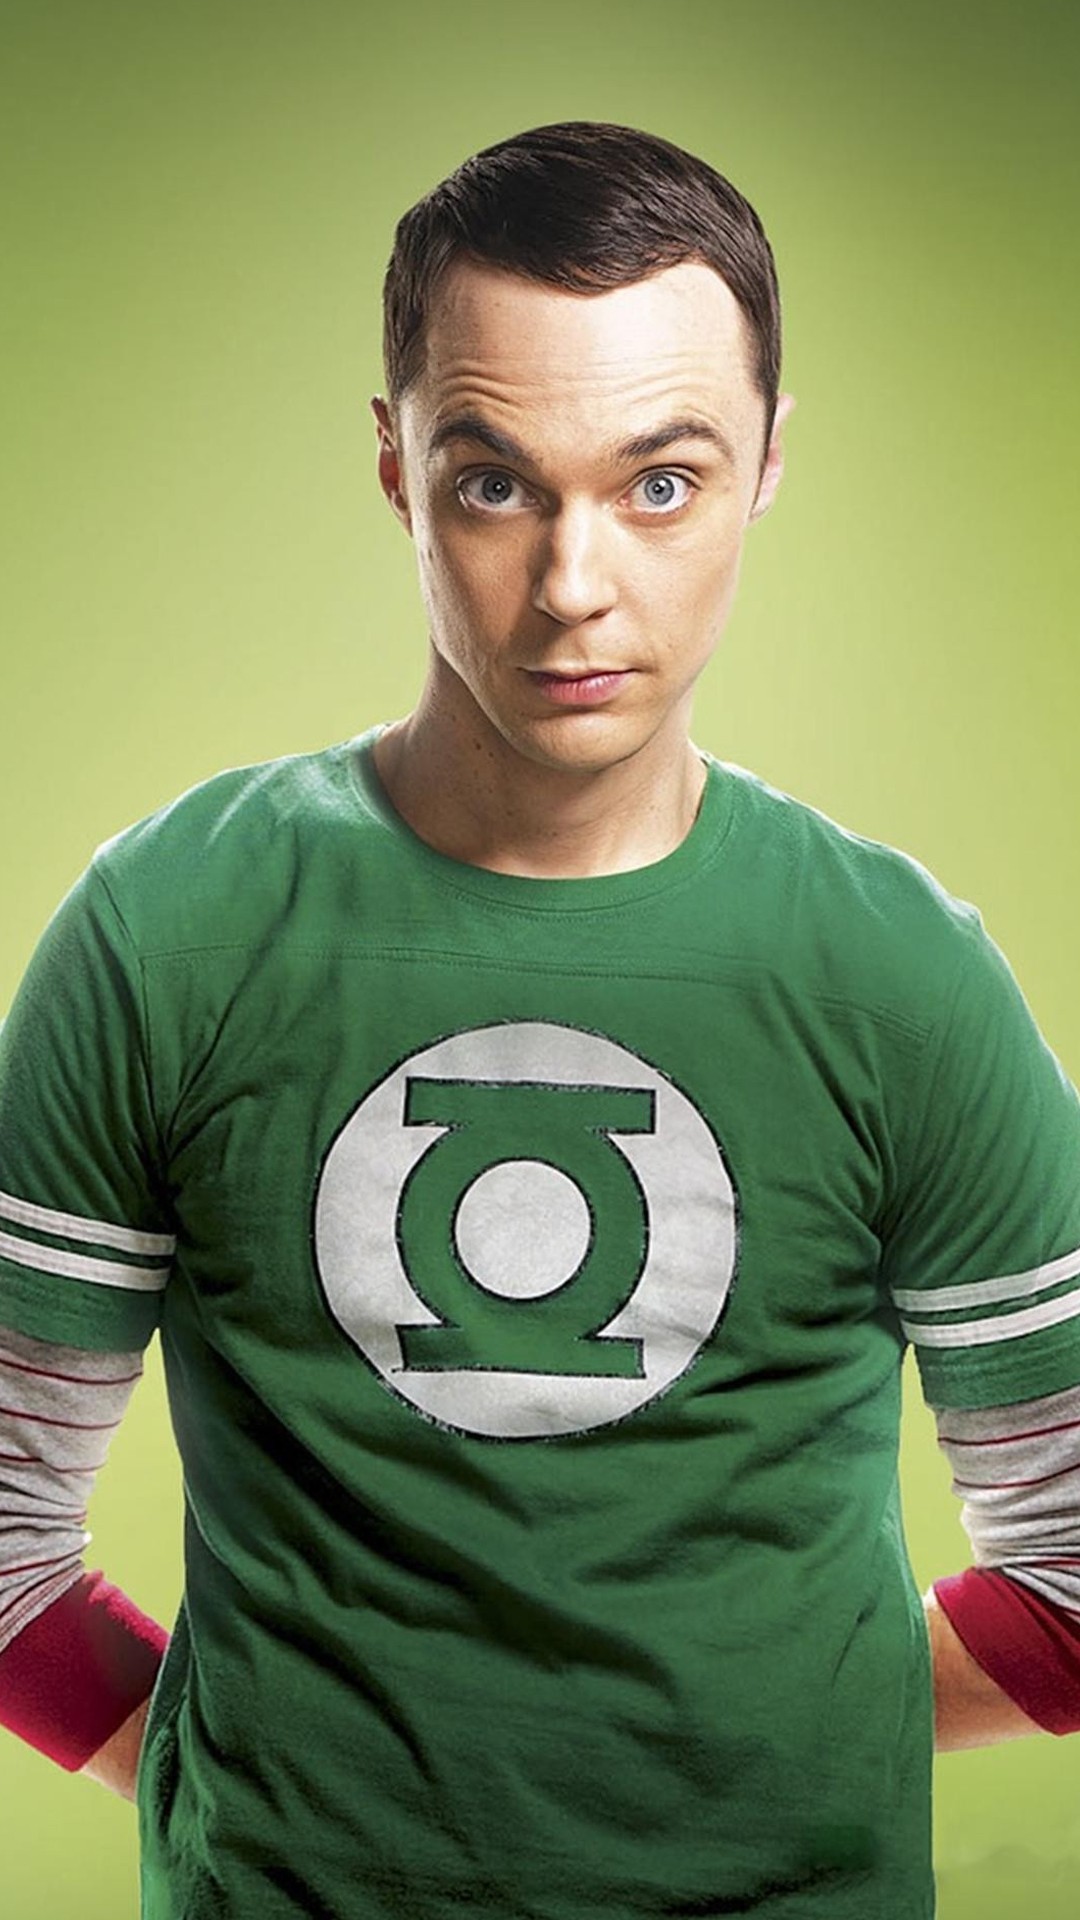 by Sheldon Cooper in Sheldon Cooper Costume - The Big Bang Sheldon Coop...